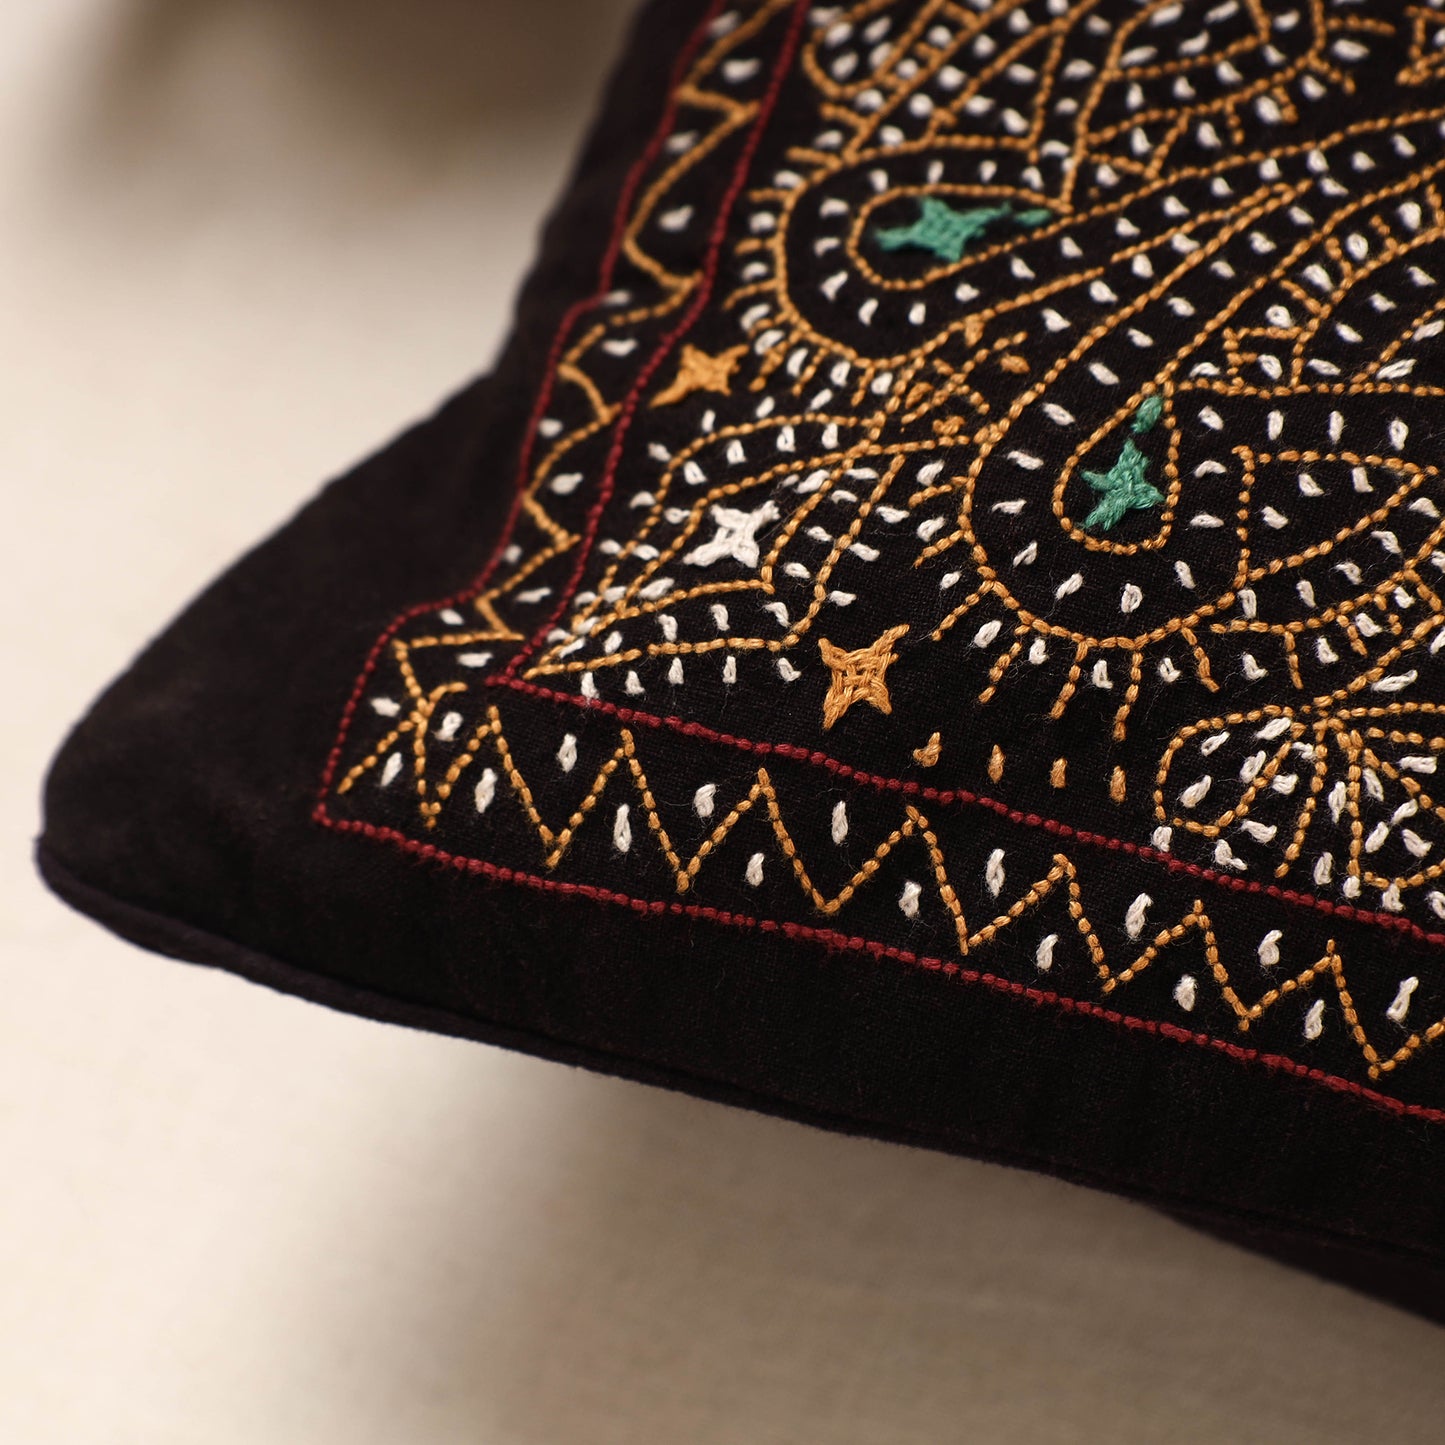 Kala Raksha Rabari Bakhiya Hand Embroidery Cotton Cushion Cover (12 x 12 in)